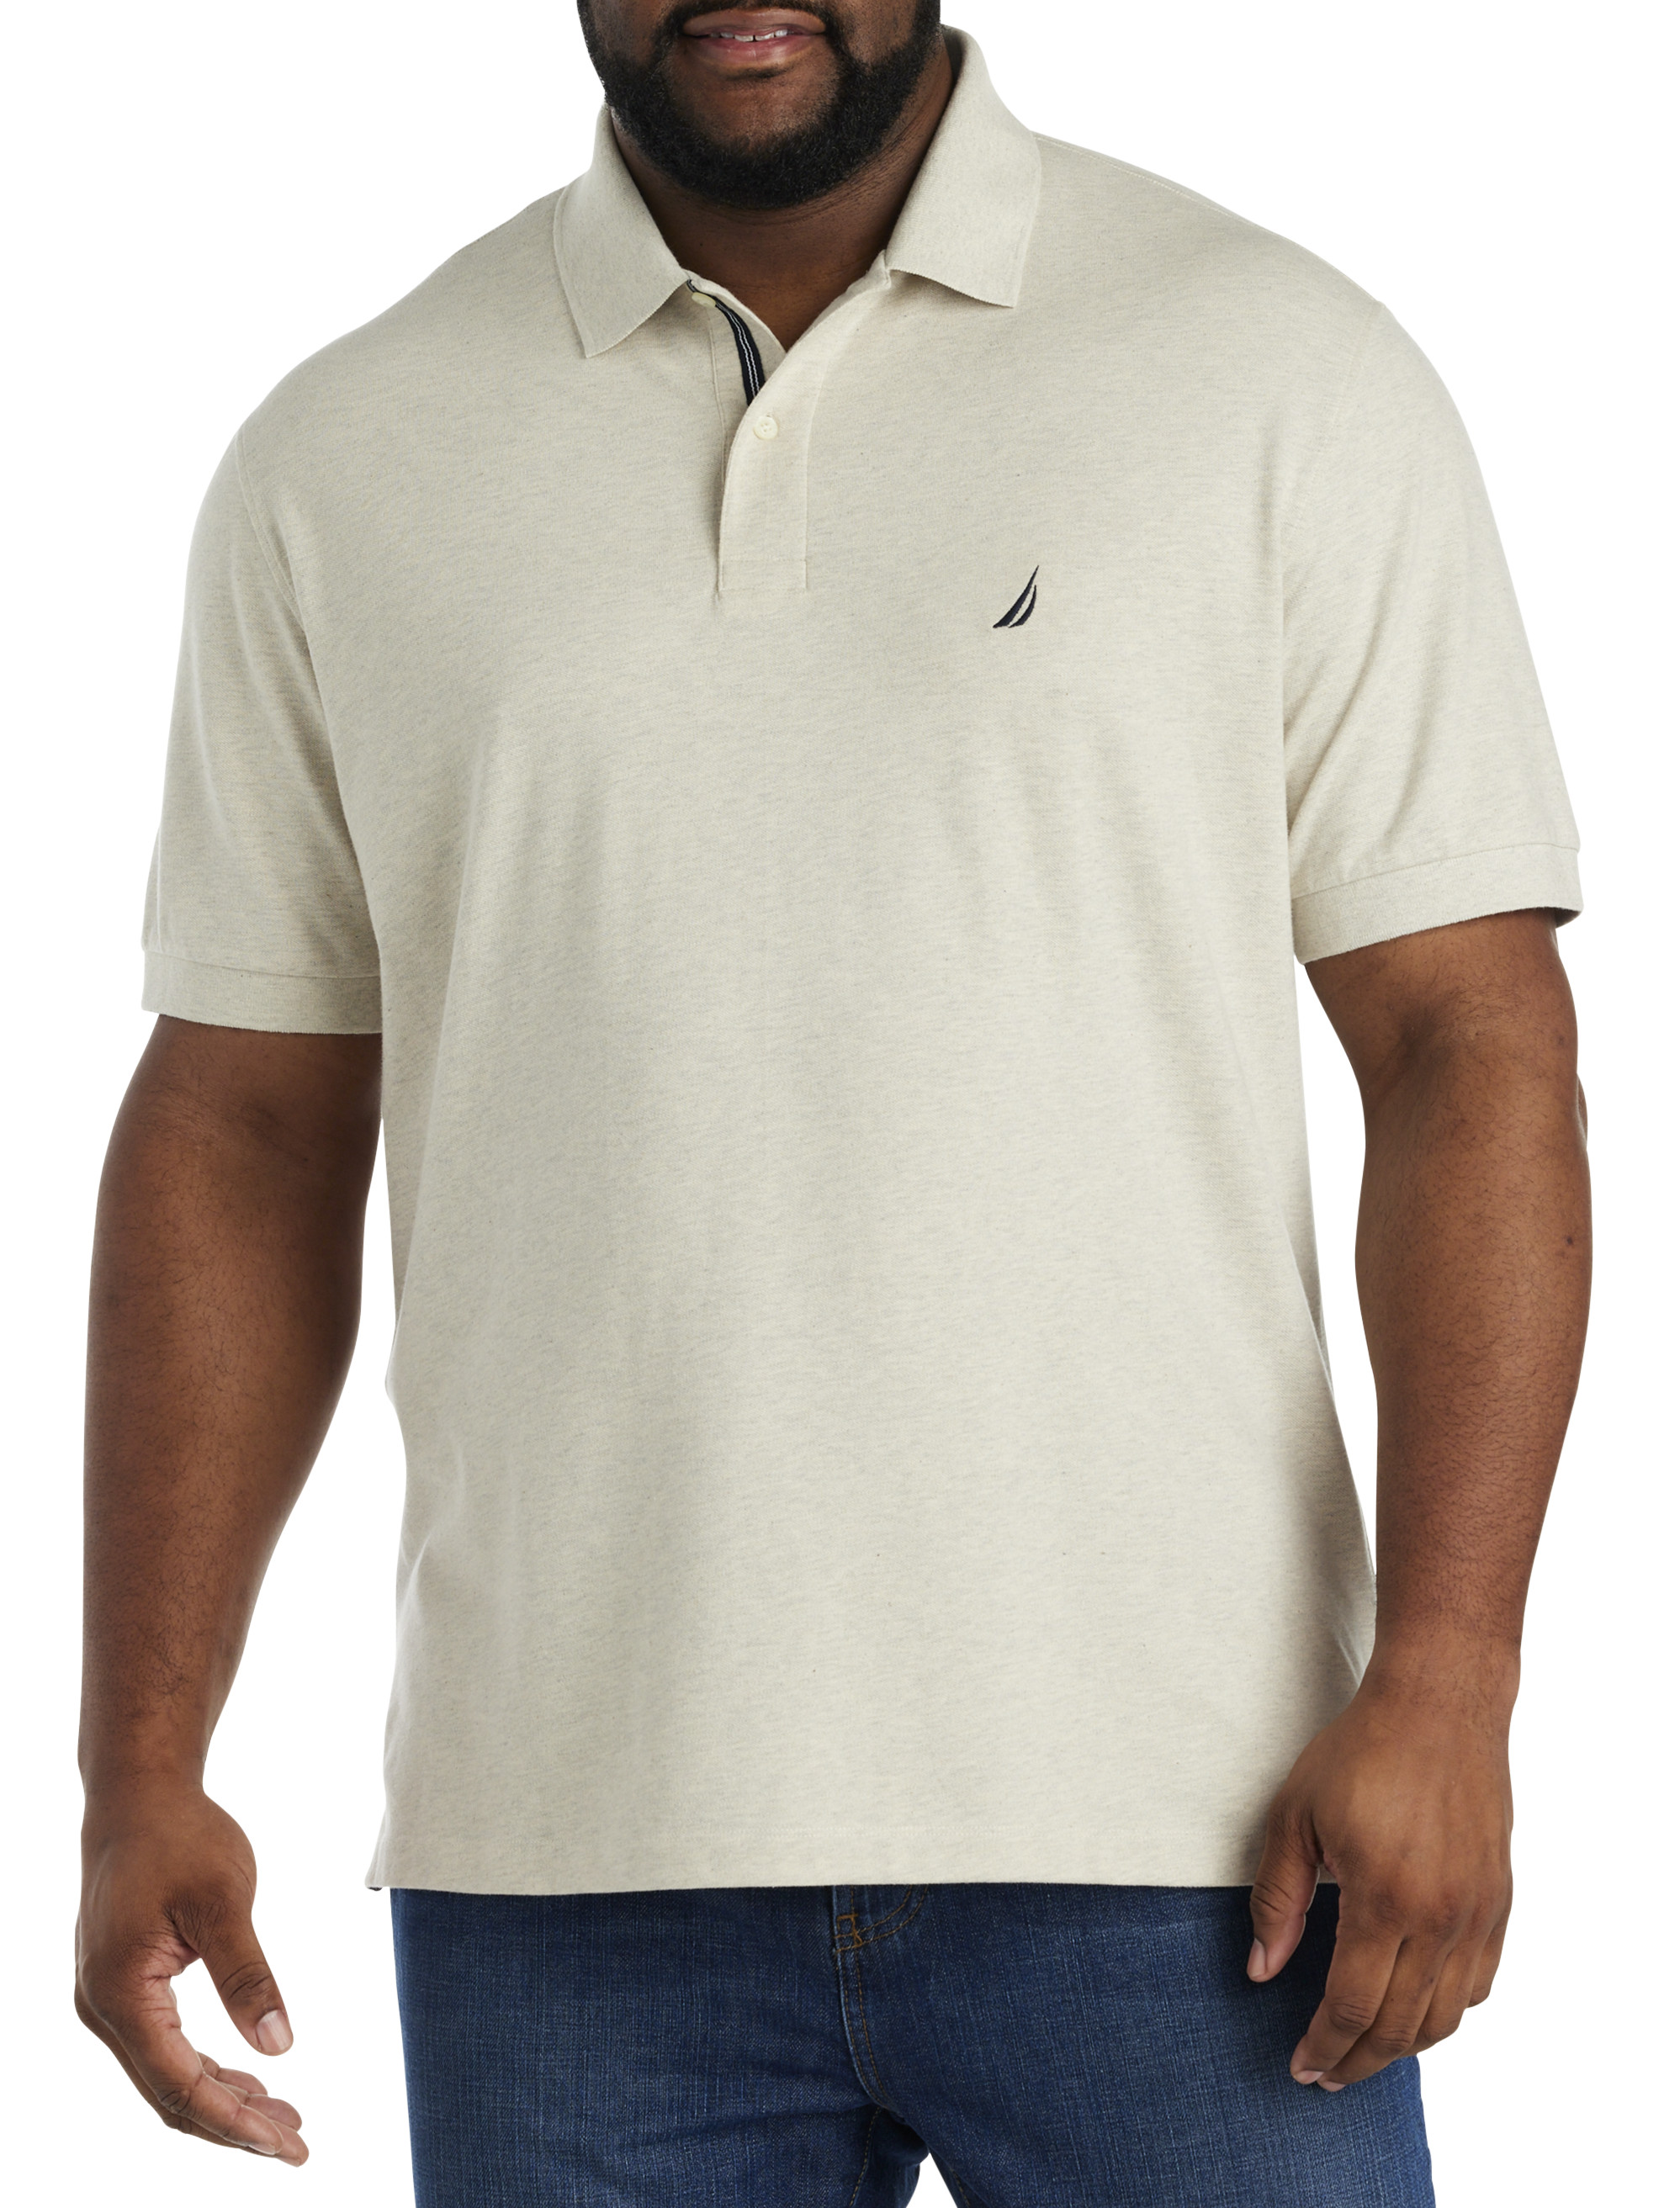 Big + Tall, Nautica Pique Polo Shirt